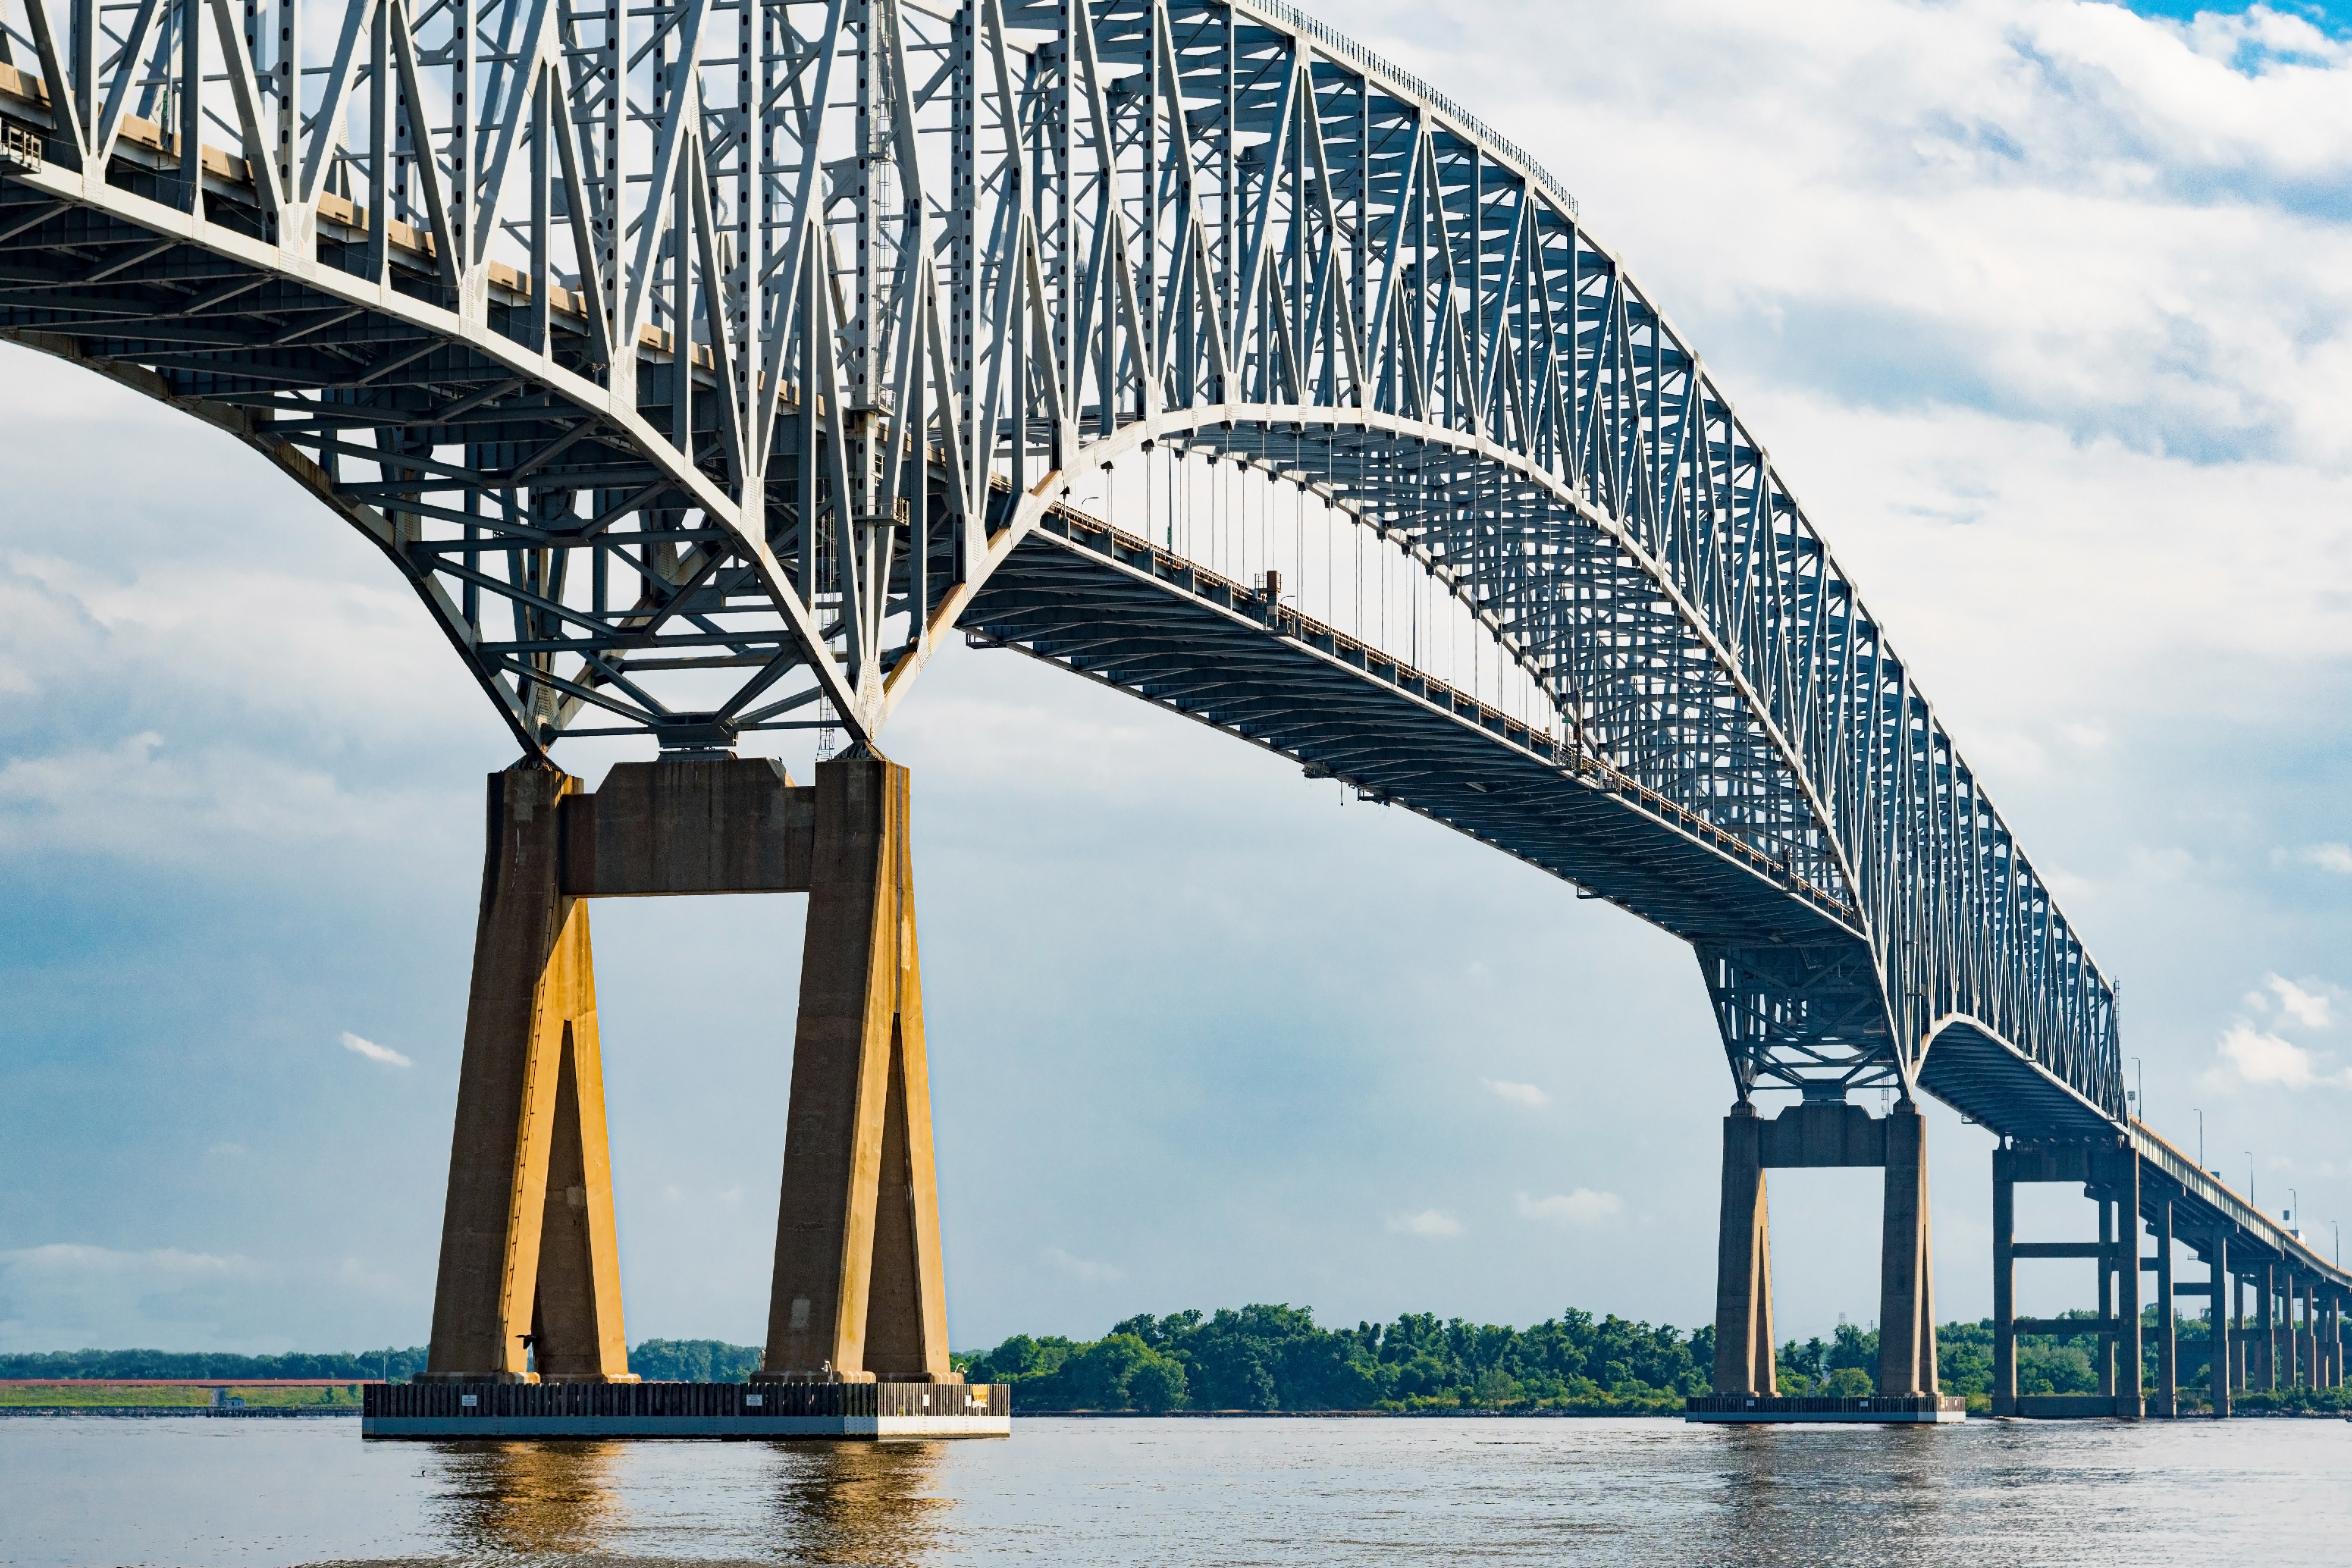 News Updates: Maersk cargo vessel collides with Baltimore Bridge